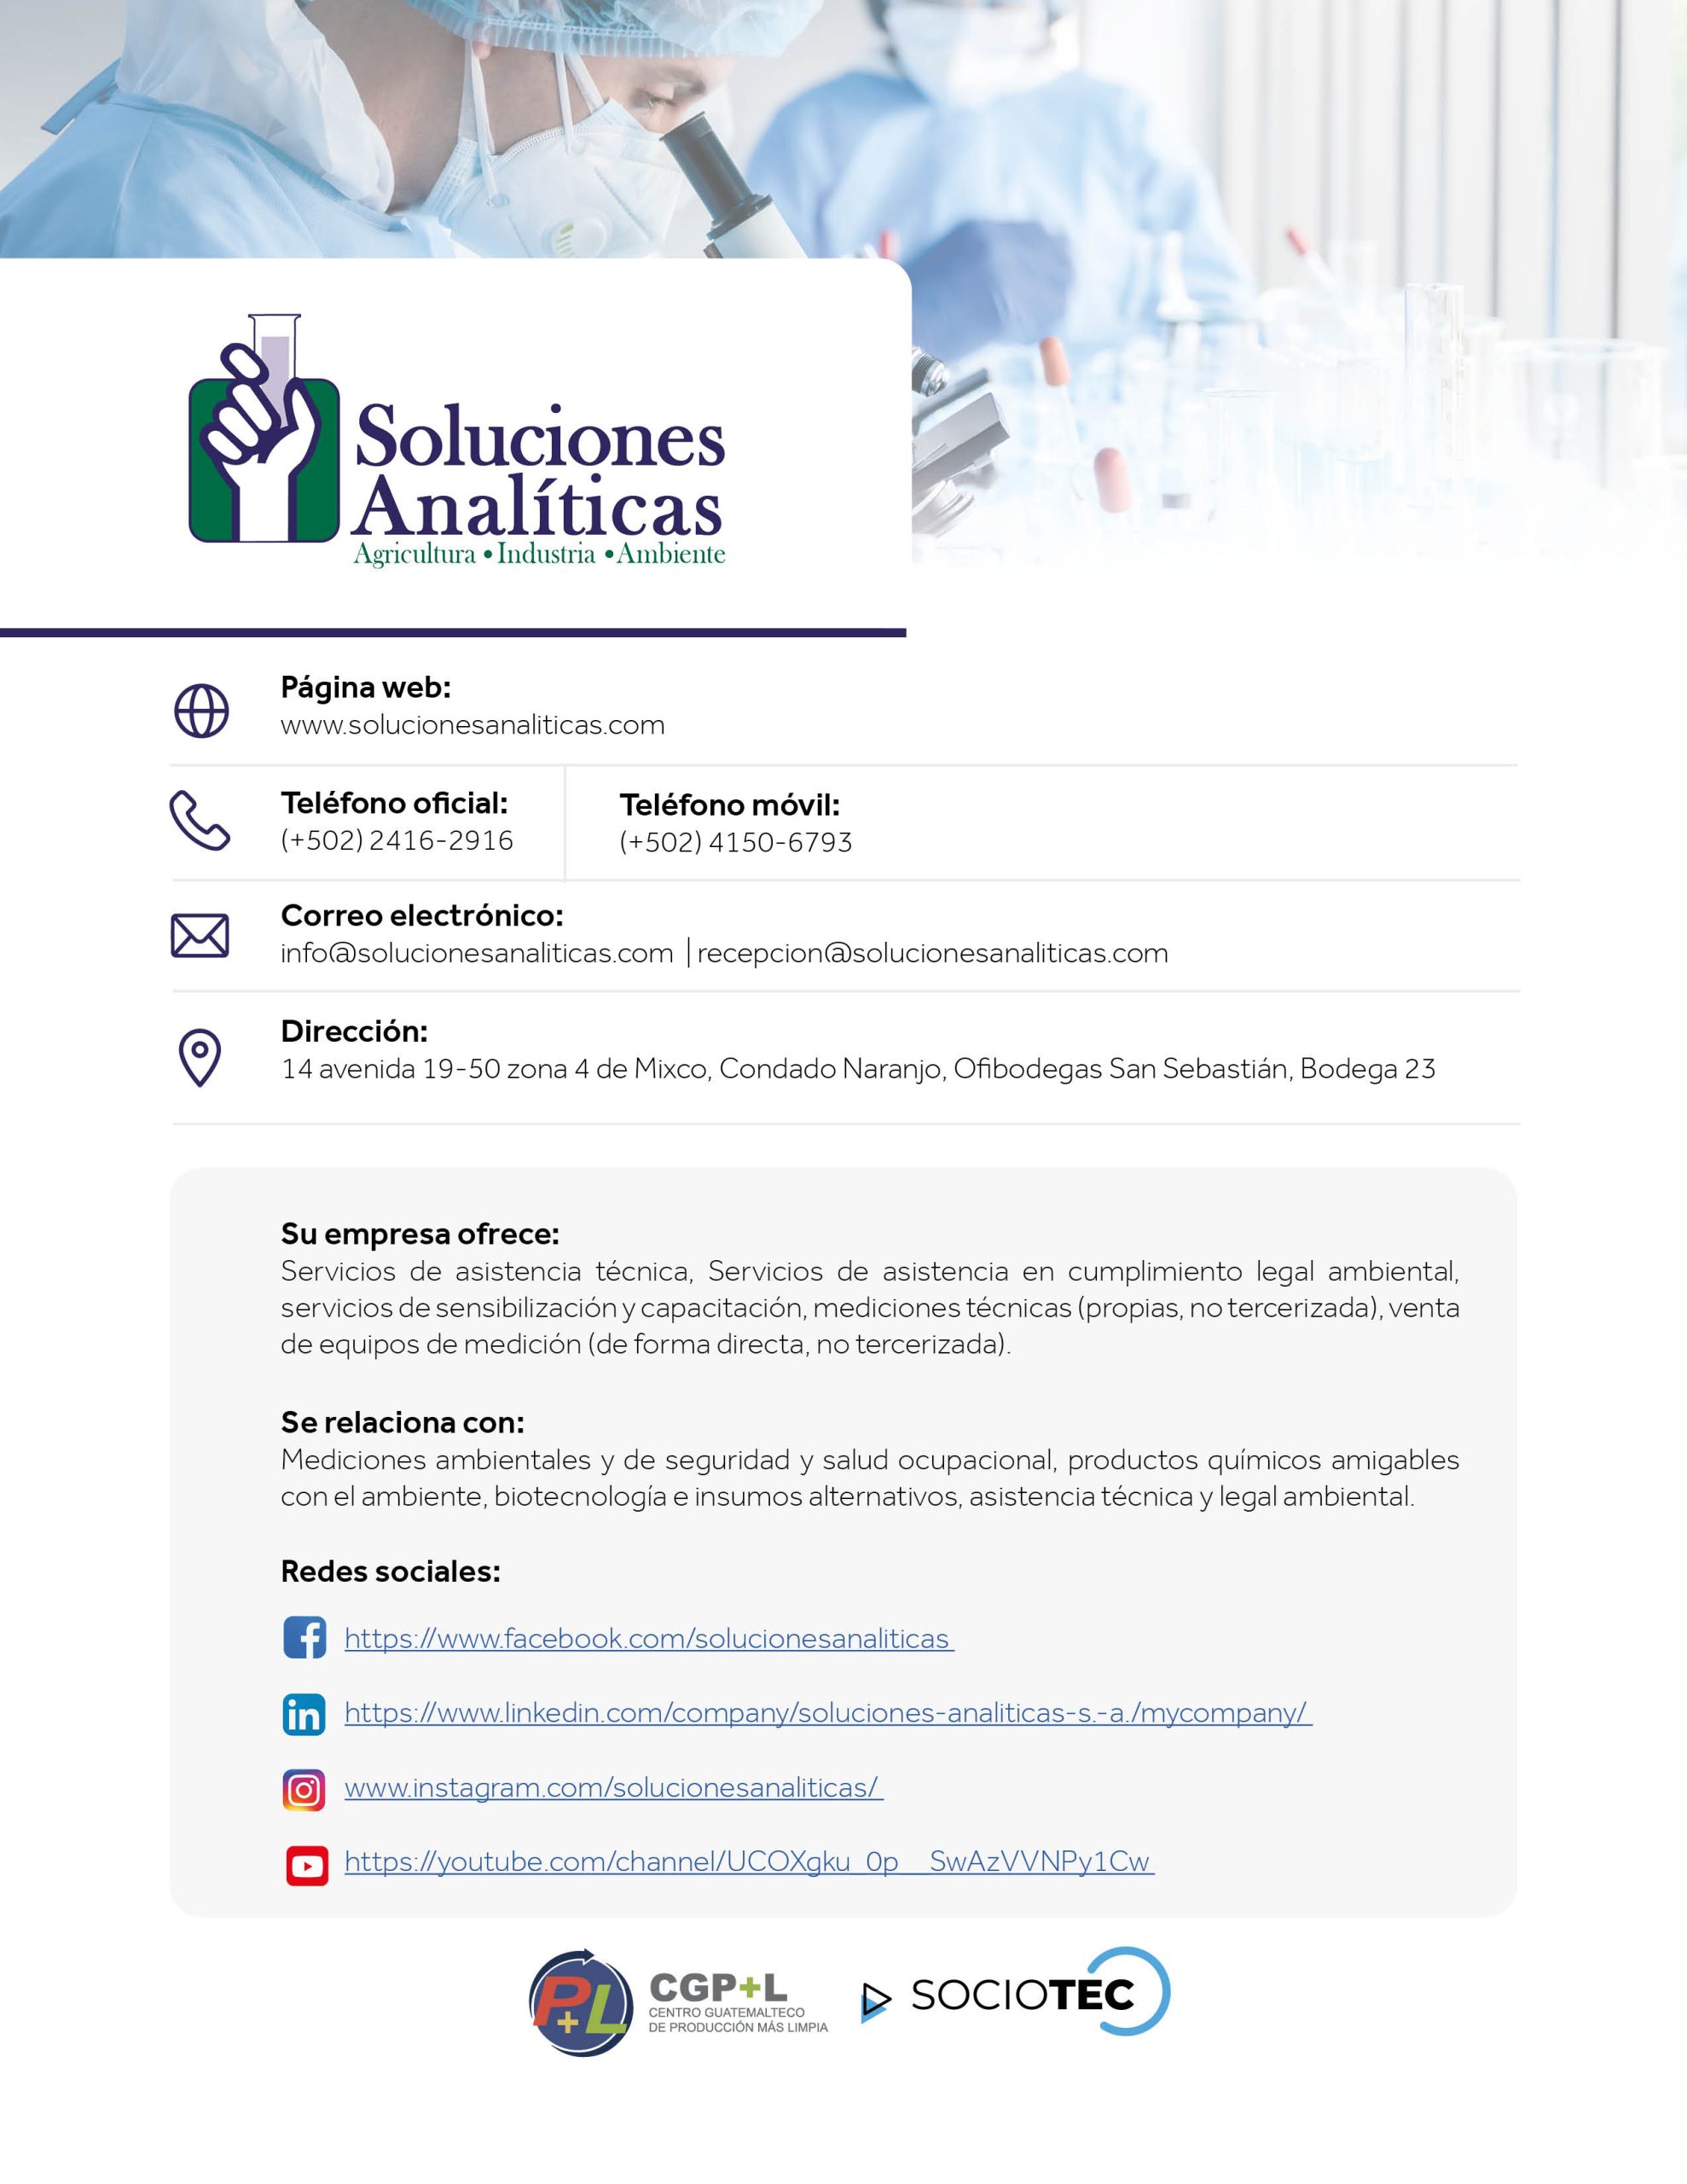 CatálogoSociosTec_Soluciones Analíticas